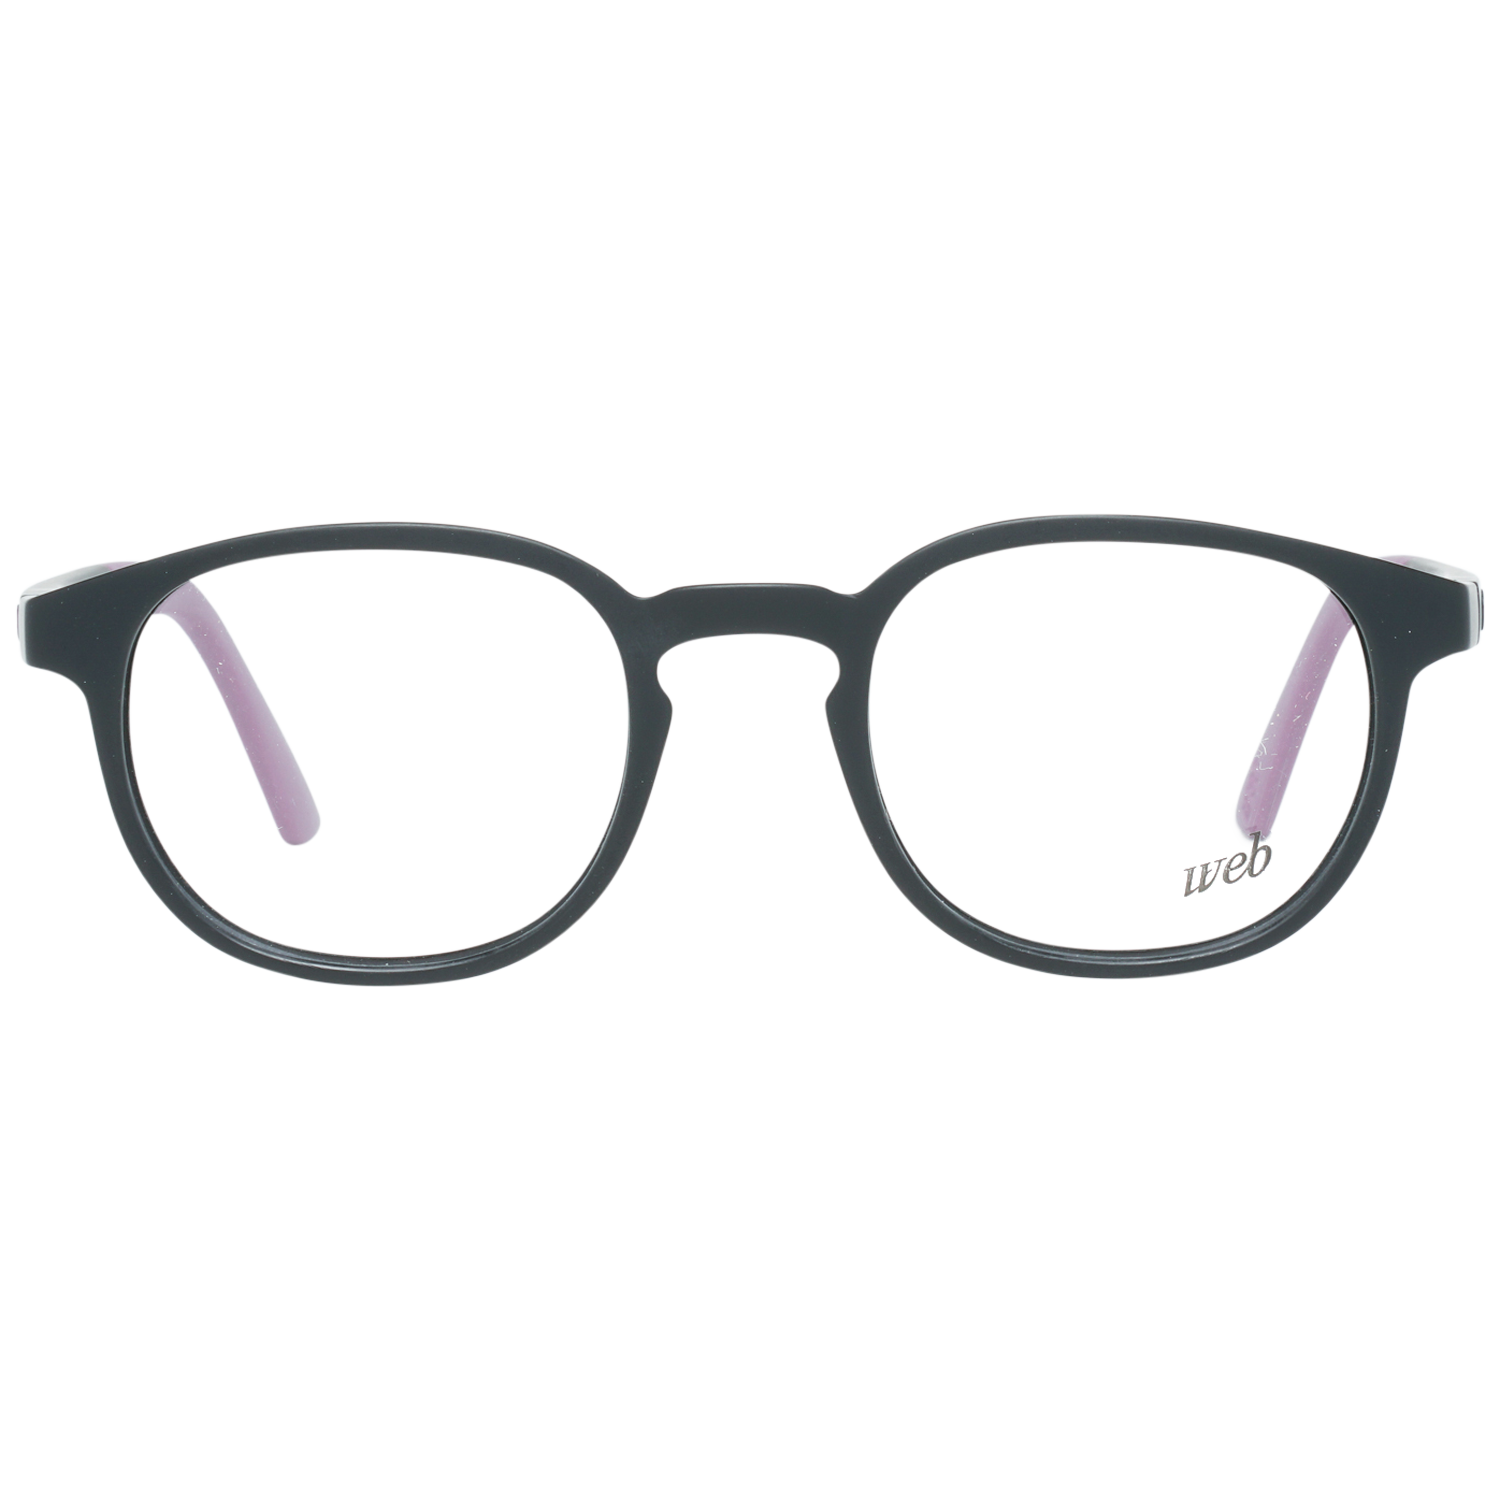 Web Frames Web Glasses Optical Frame WE5185 A02 47 Eyeglasses Eyewear UK USA Australia 